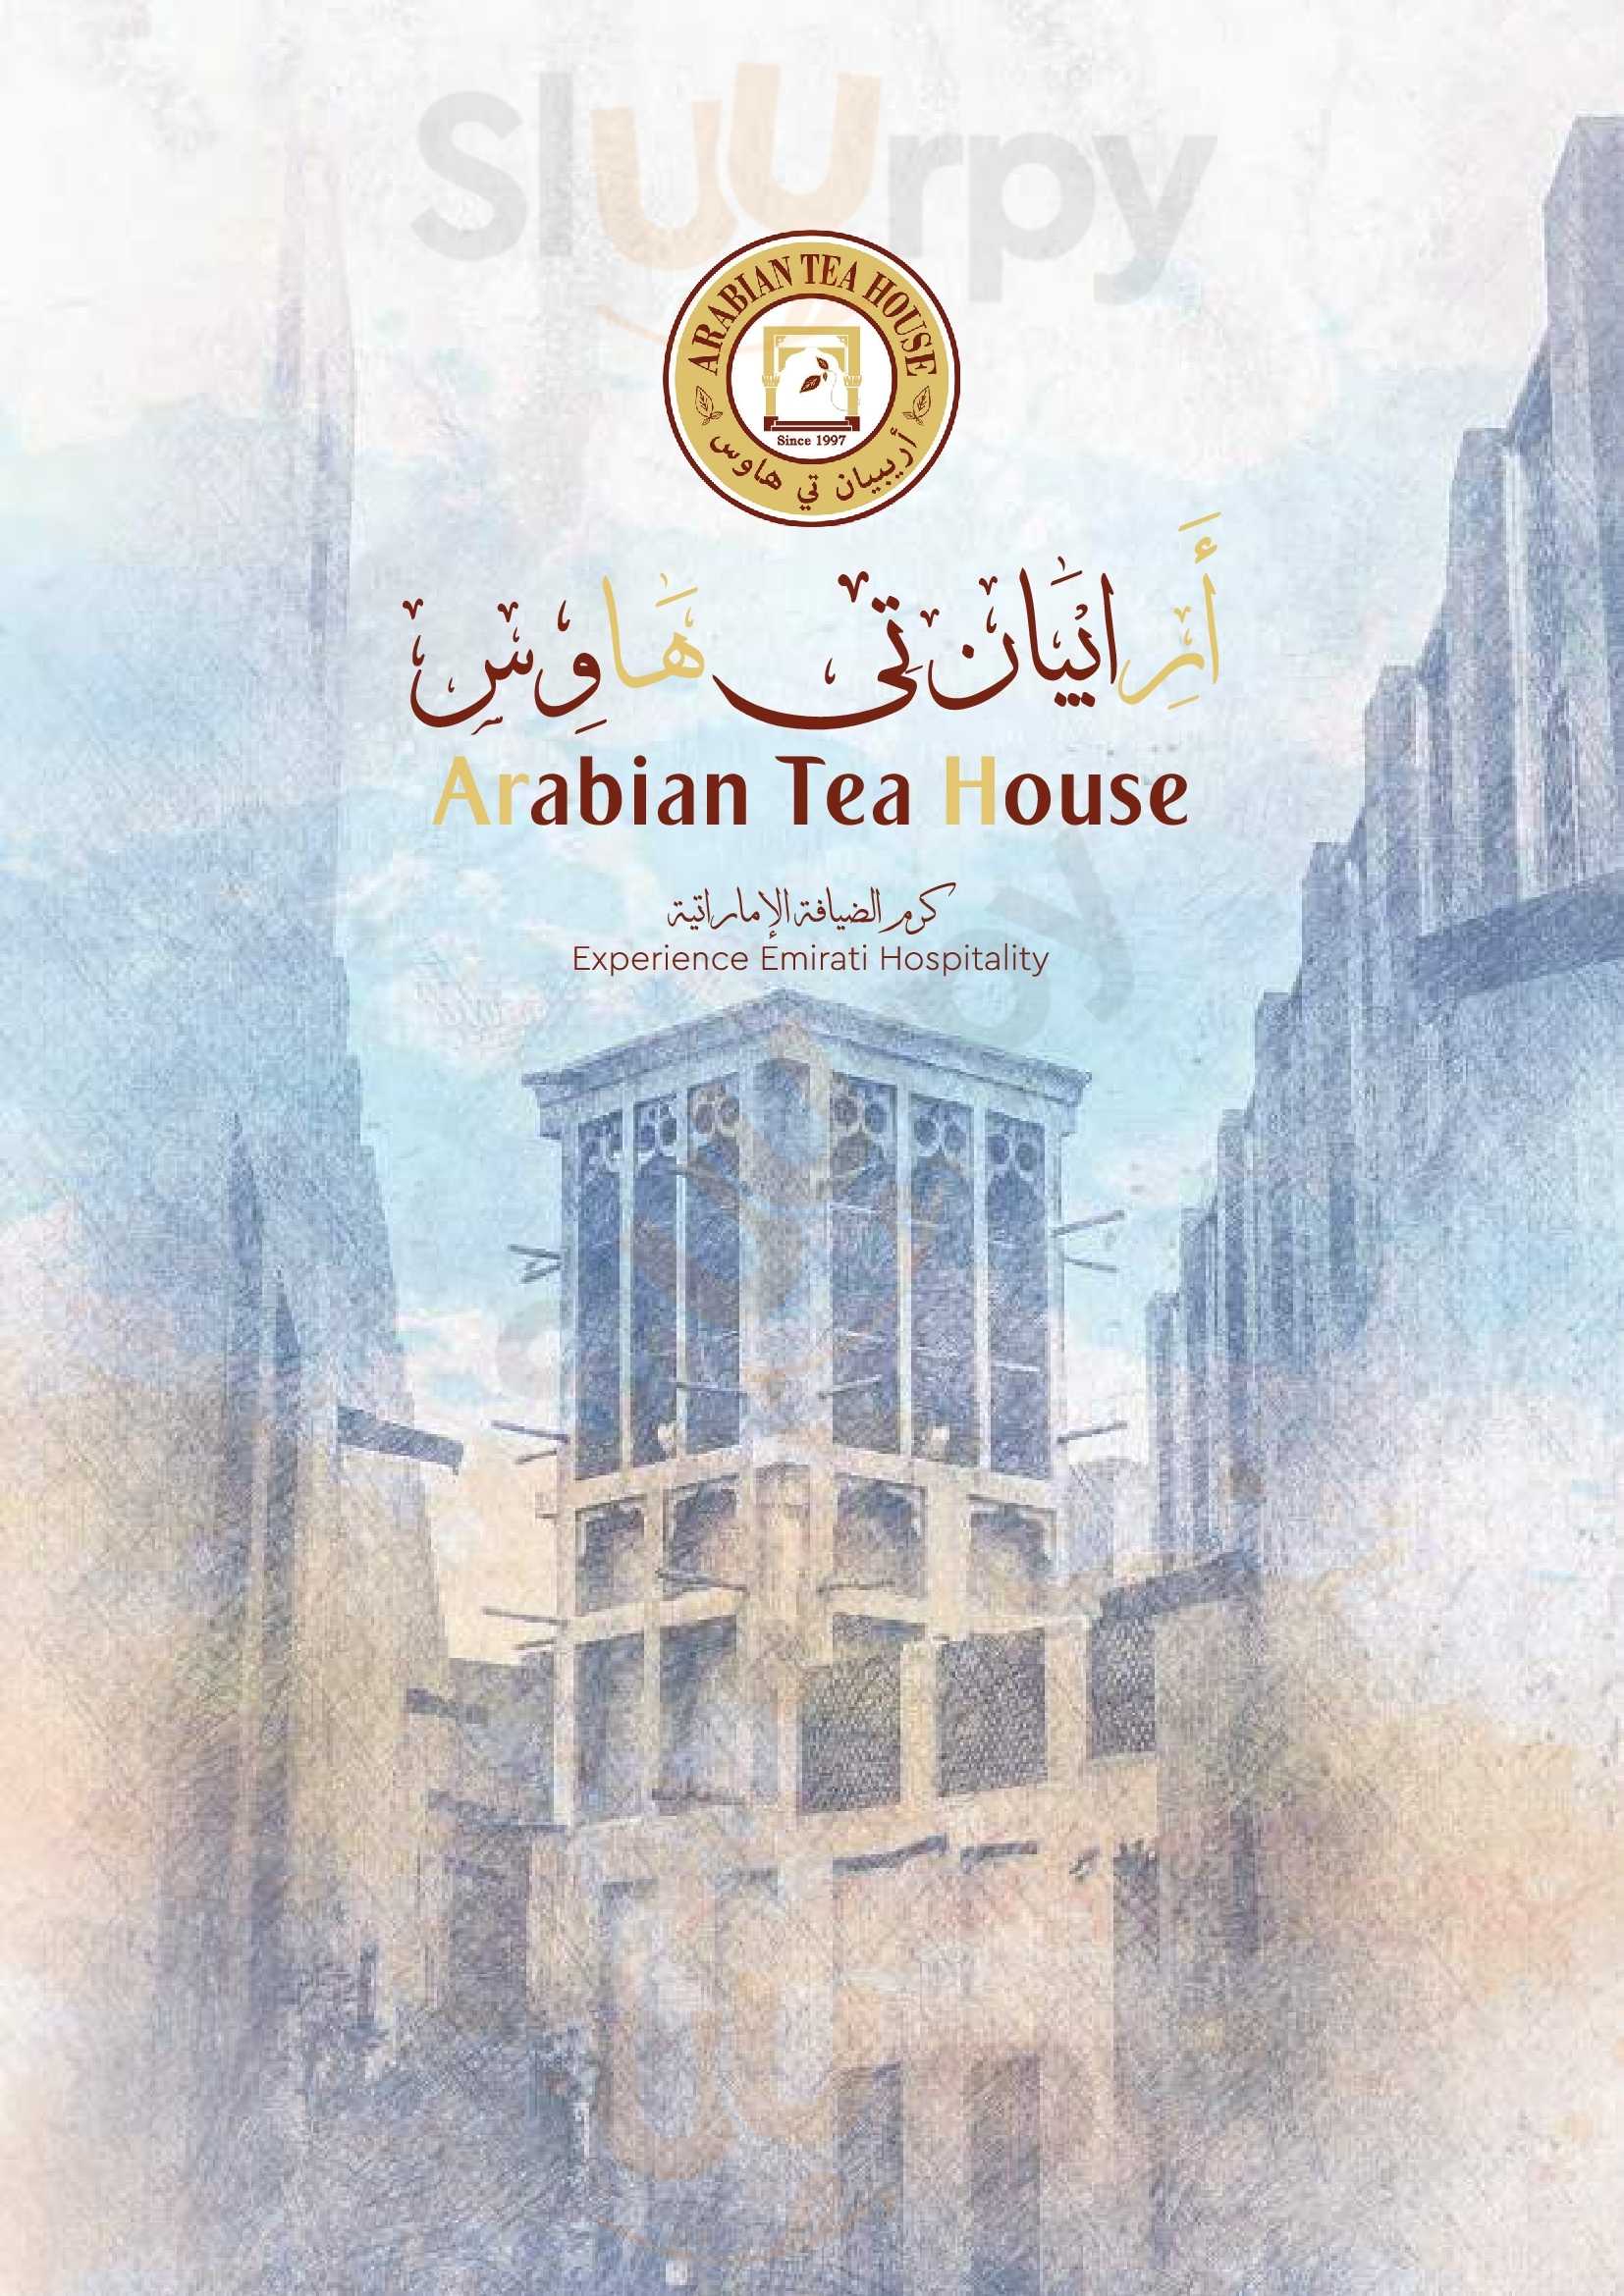 ‪arabian Tea House Restaurant & Cafe - Al Fahidi‬ دُبي Menu - 1